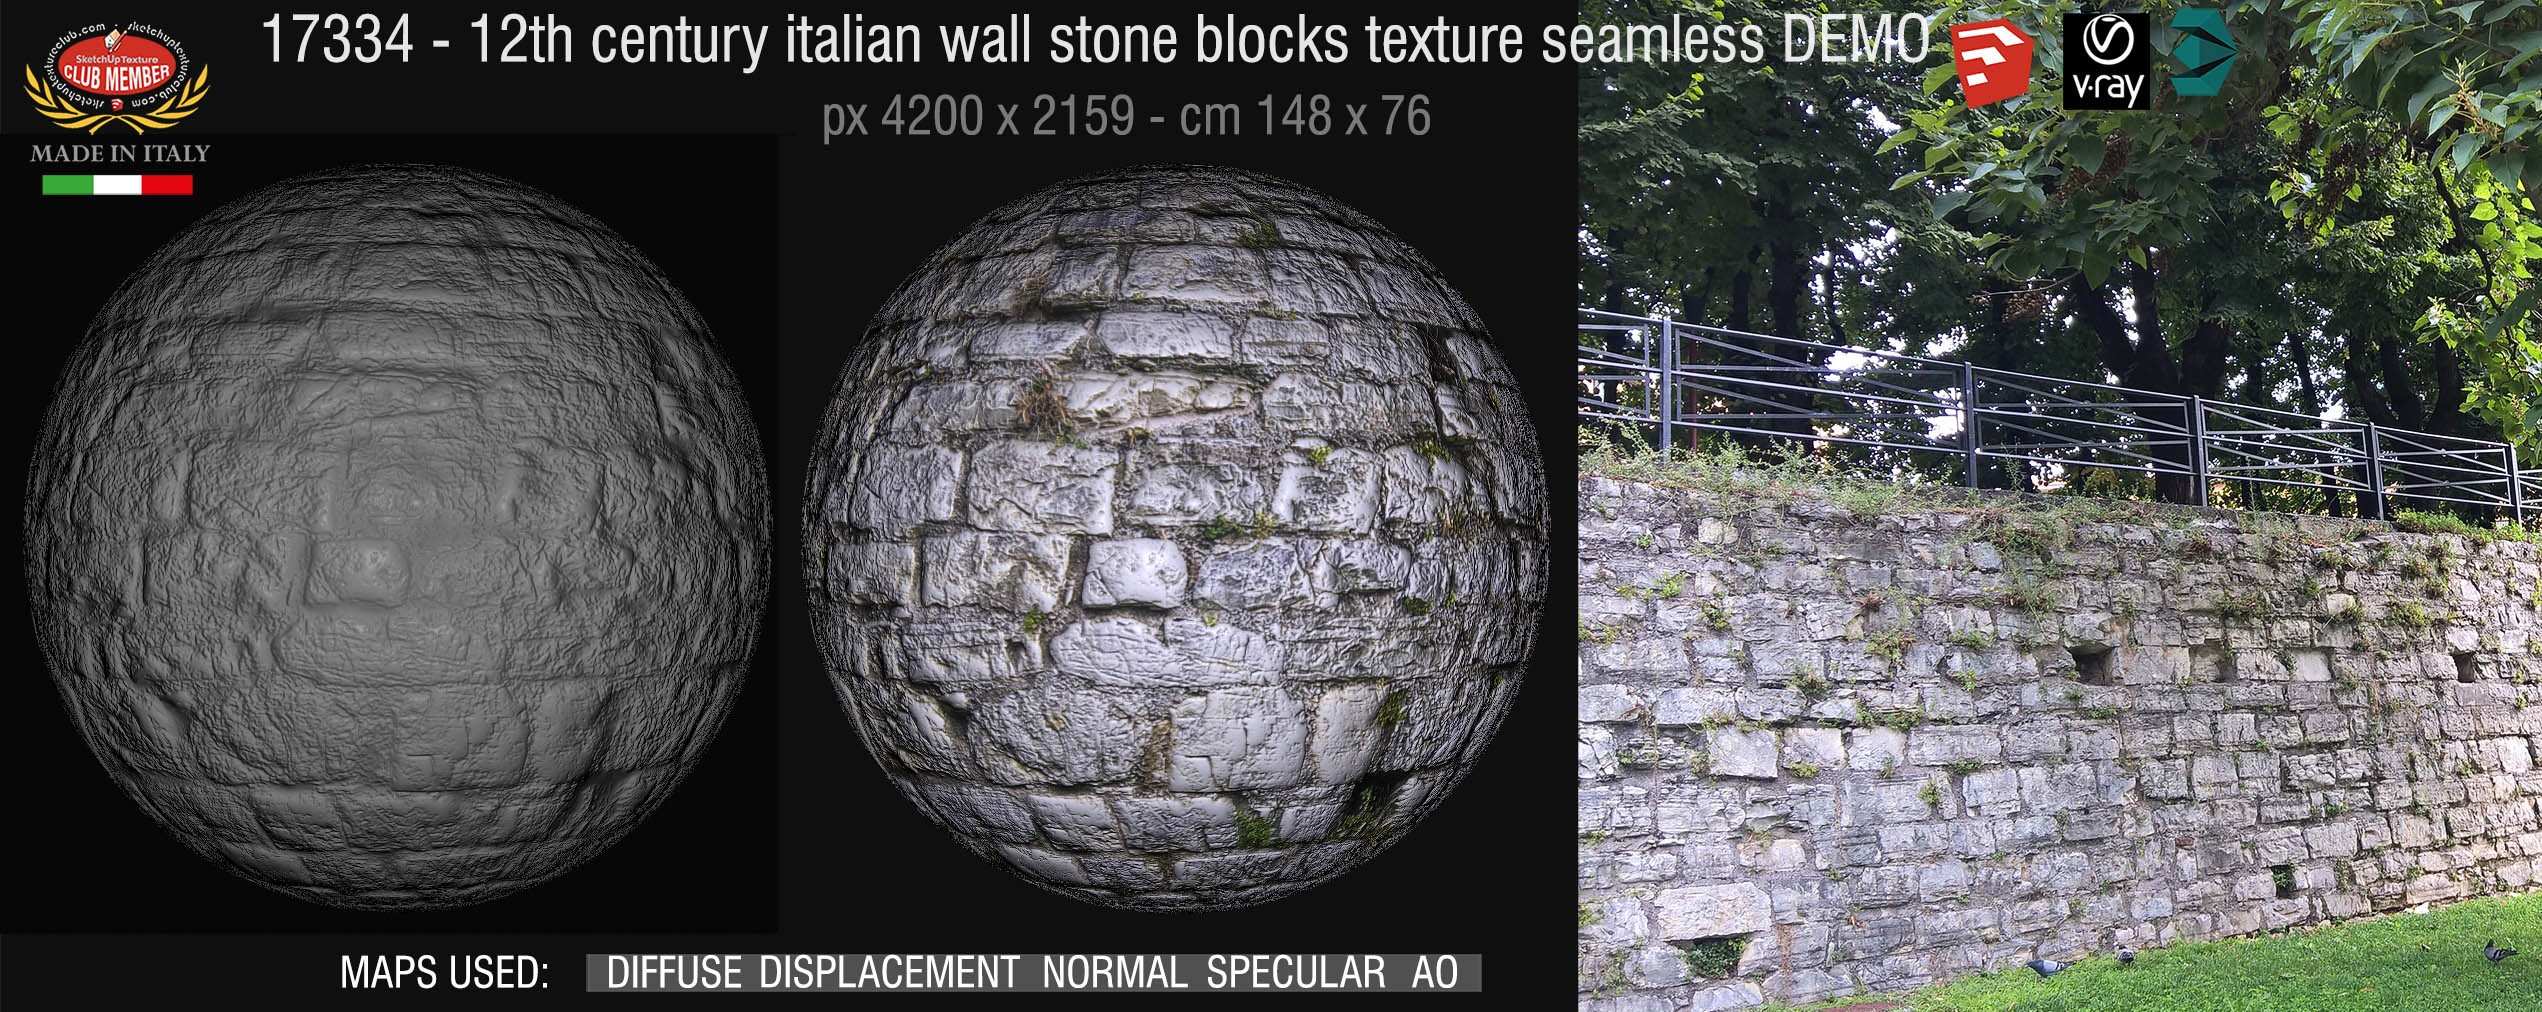 17334 HR 12th century italian wall stone blocks texture + maps DEMO